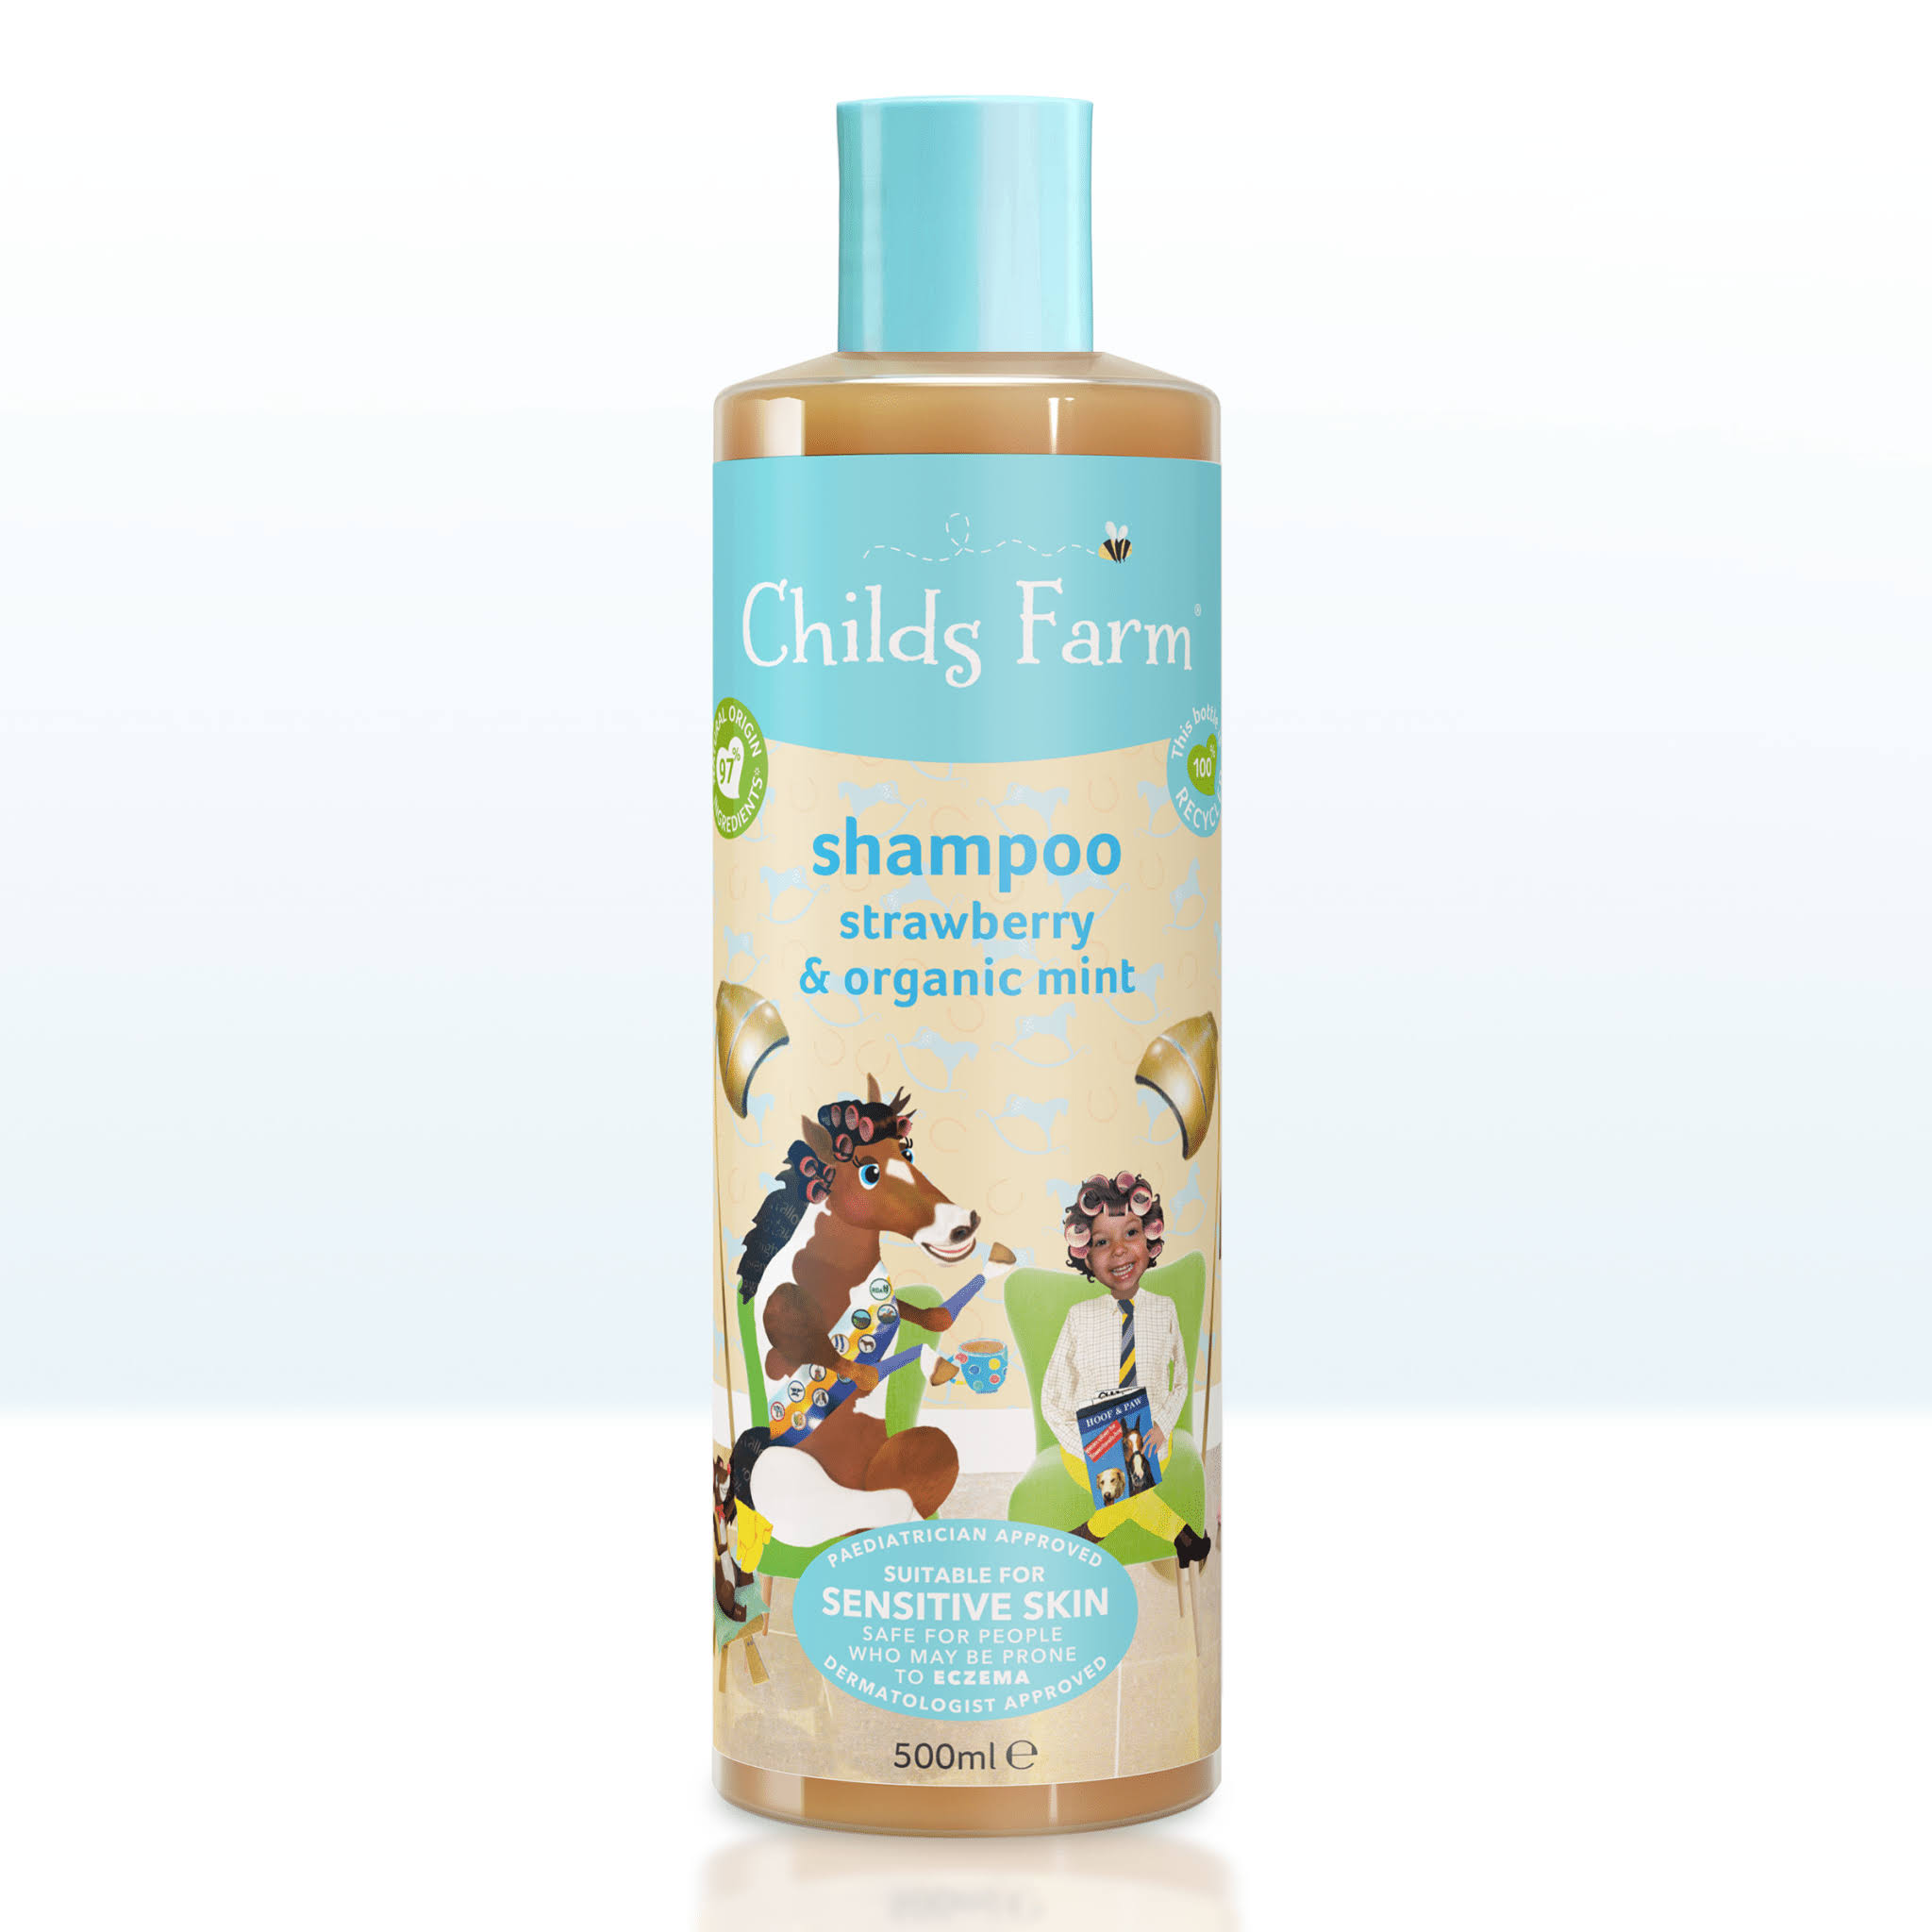 Childs Farm Shampoo - Strawberry and Organic Mint, 500ml